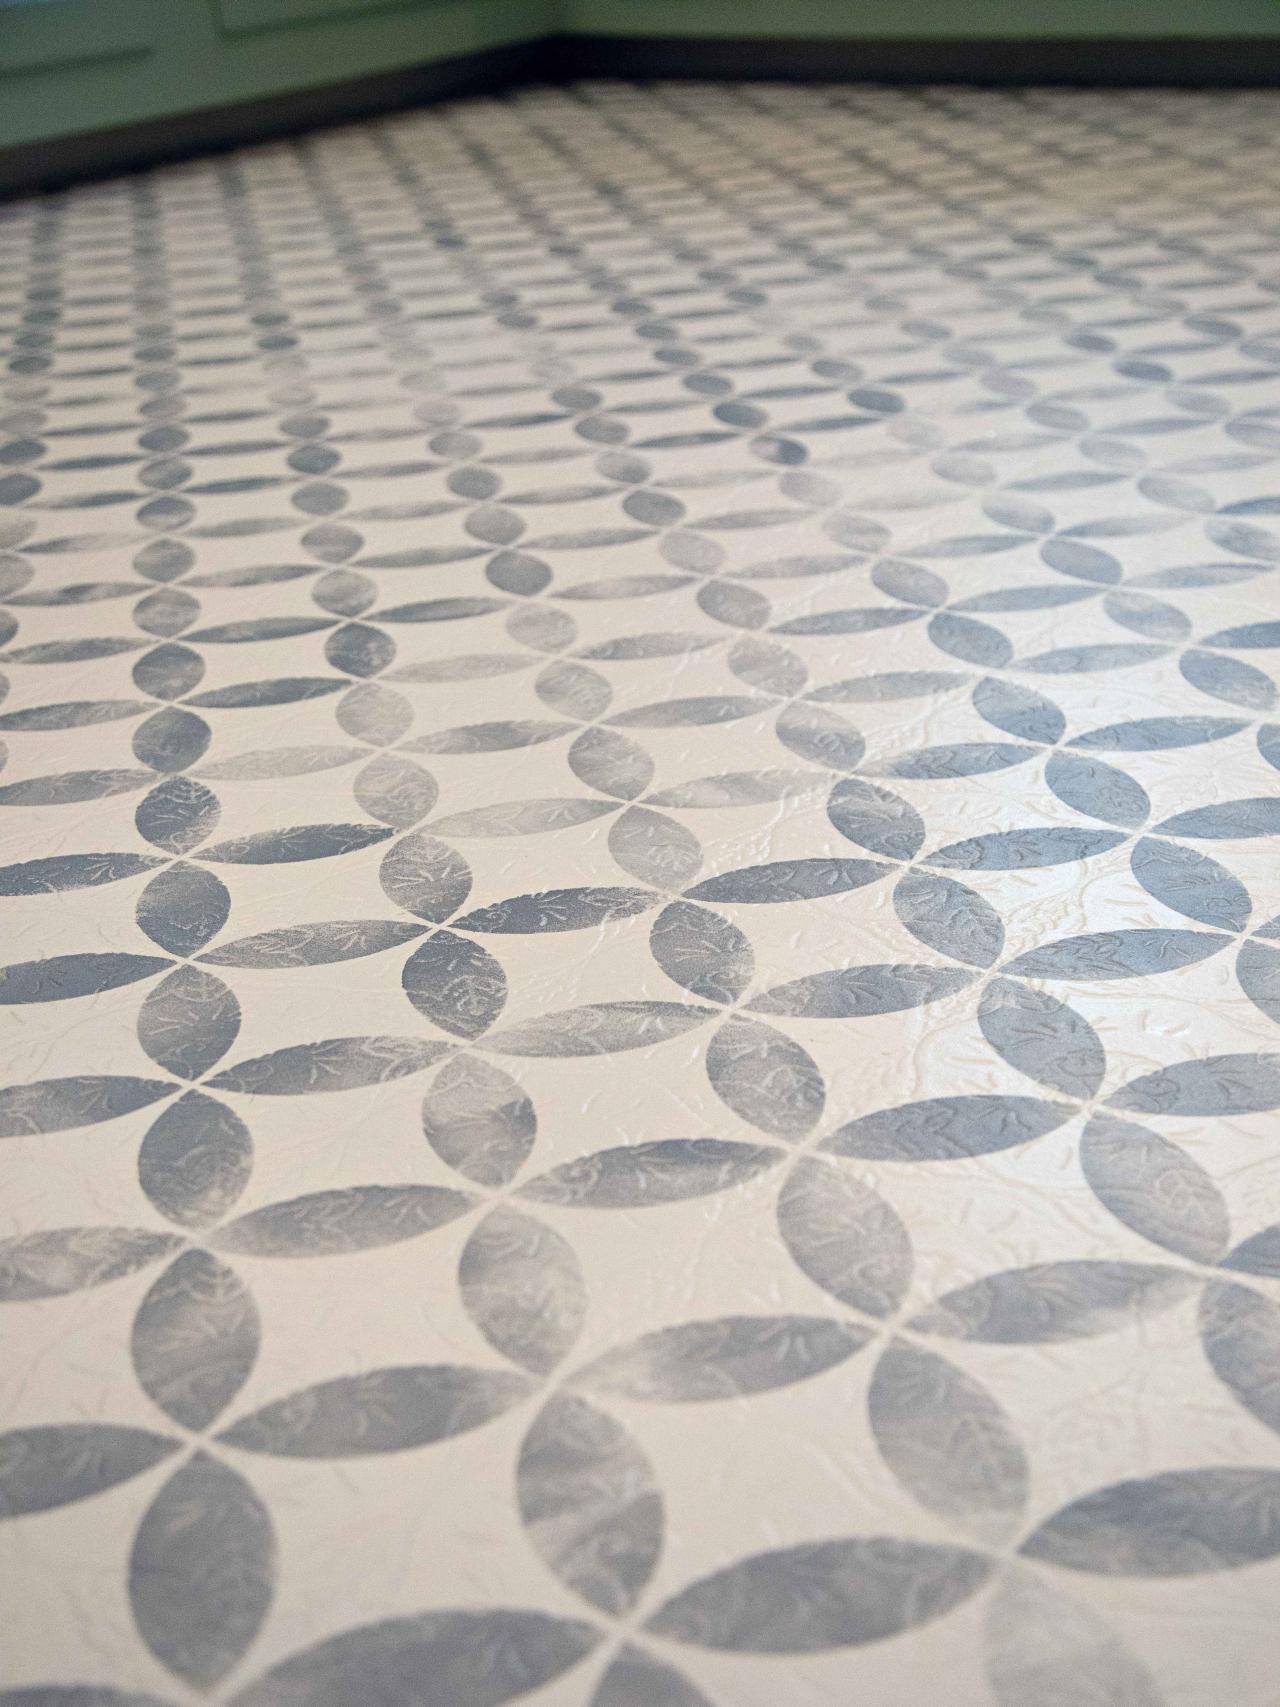 How To Paint Old Vinyl Floors Look, Floor Covering That Looks Like Tiles